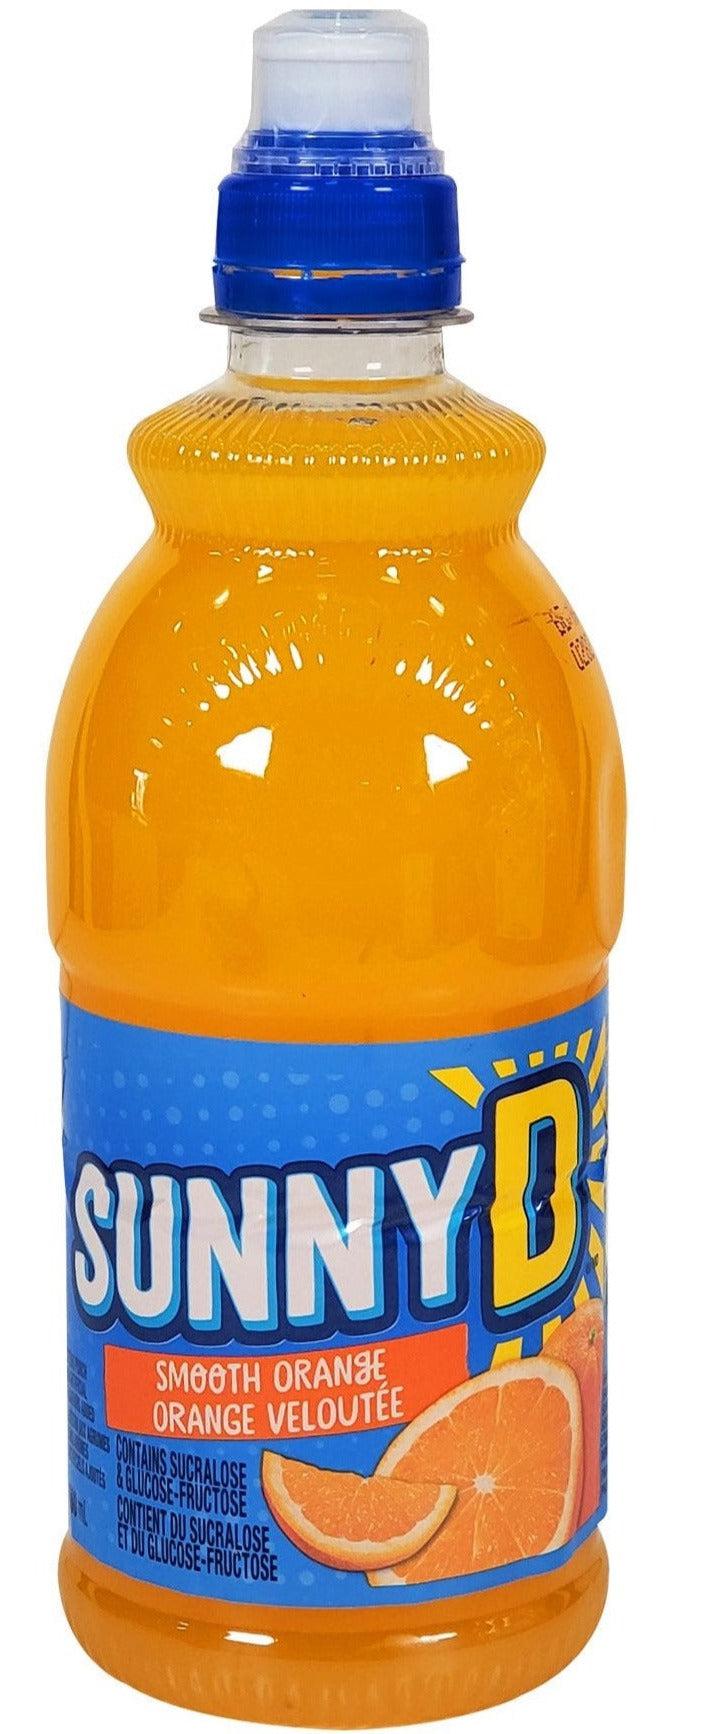 Sunny Bottle Bundle